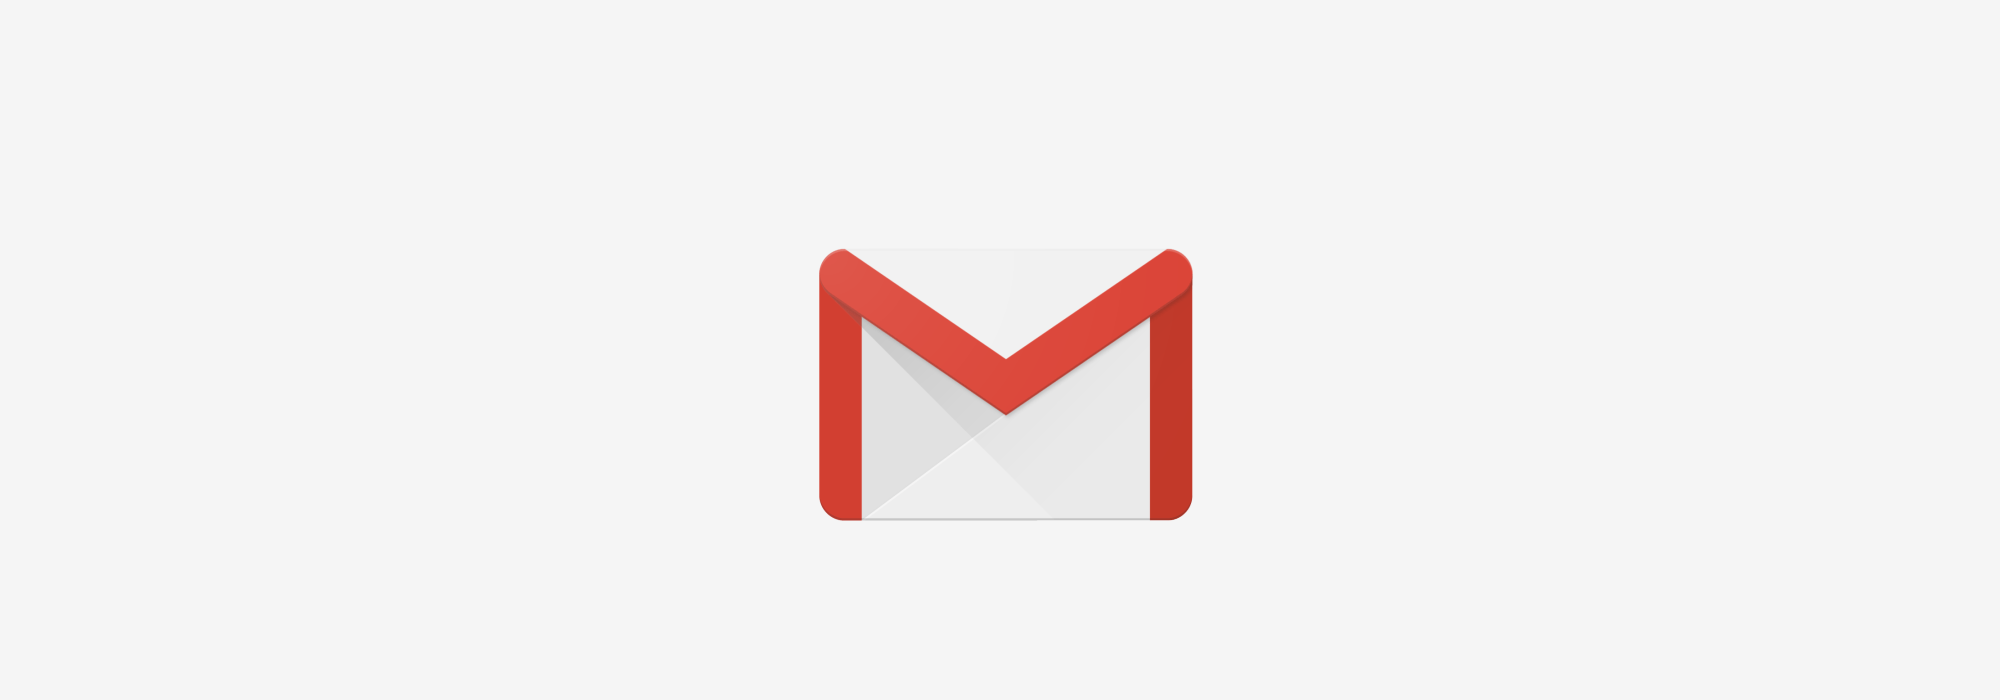 Mail.com Logo - Inbox by Gmail